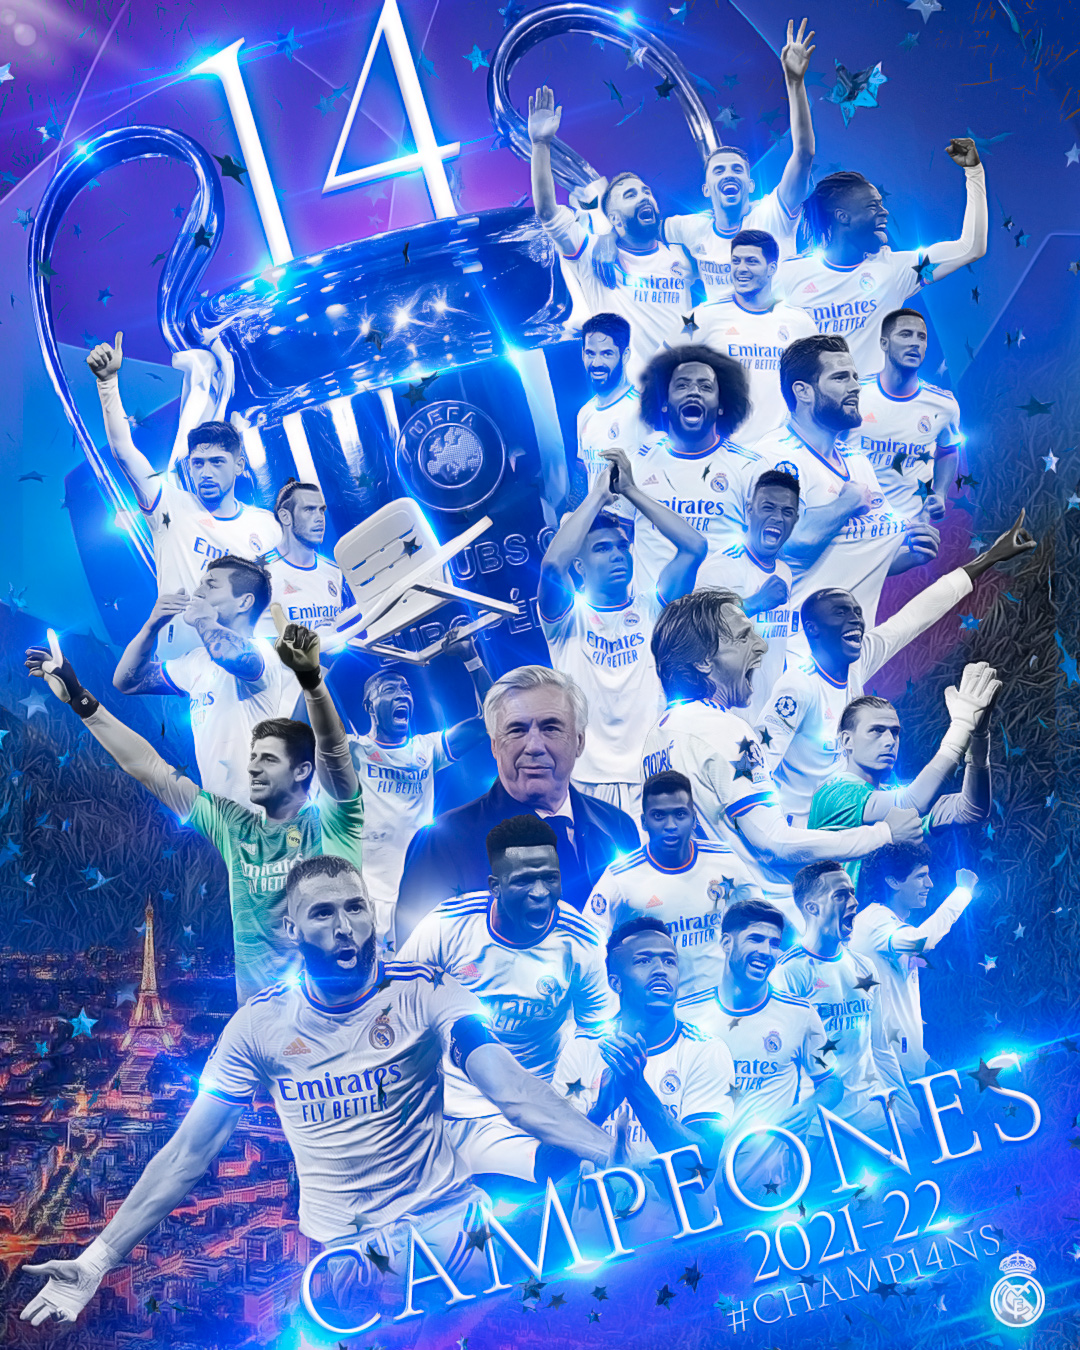 Entenda por que o Real Madrid tem 14 títulos da Champions, mas só